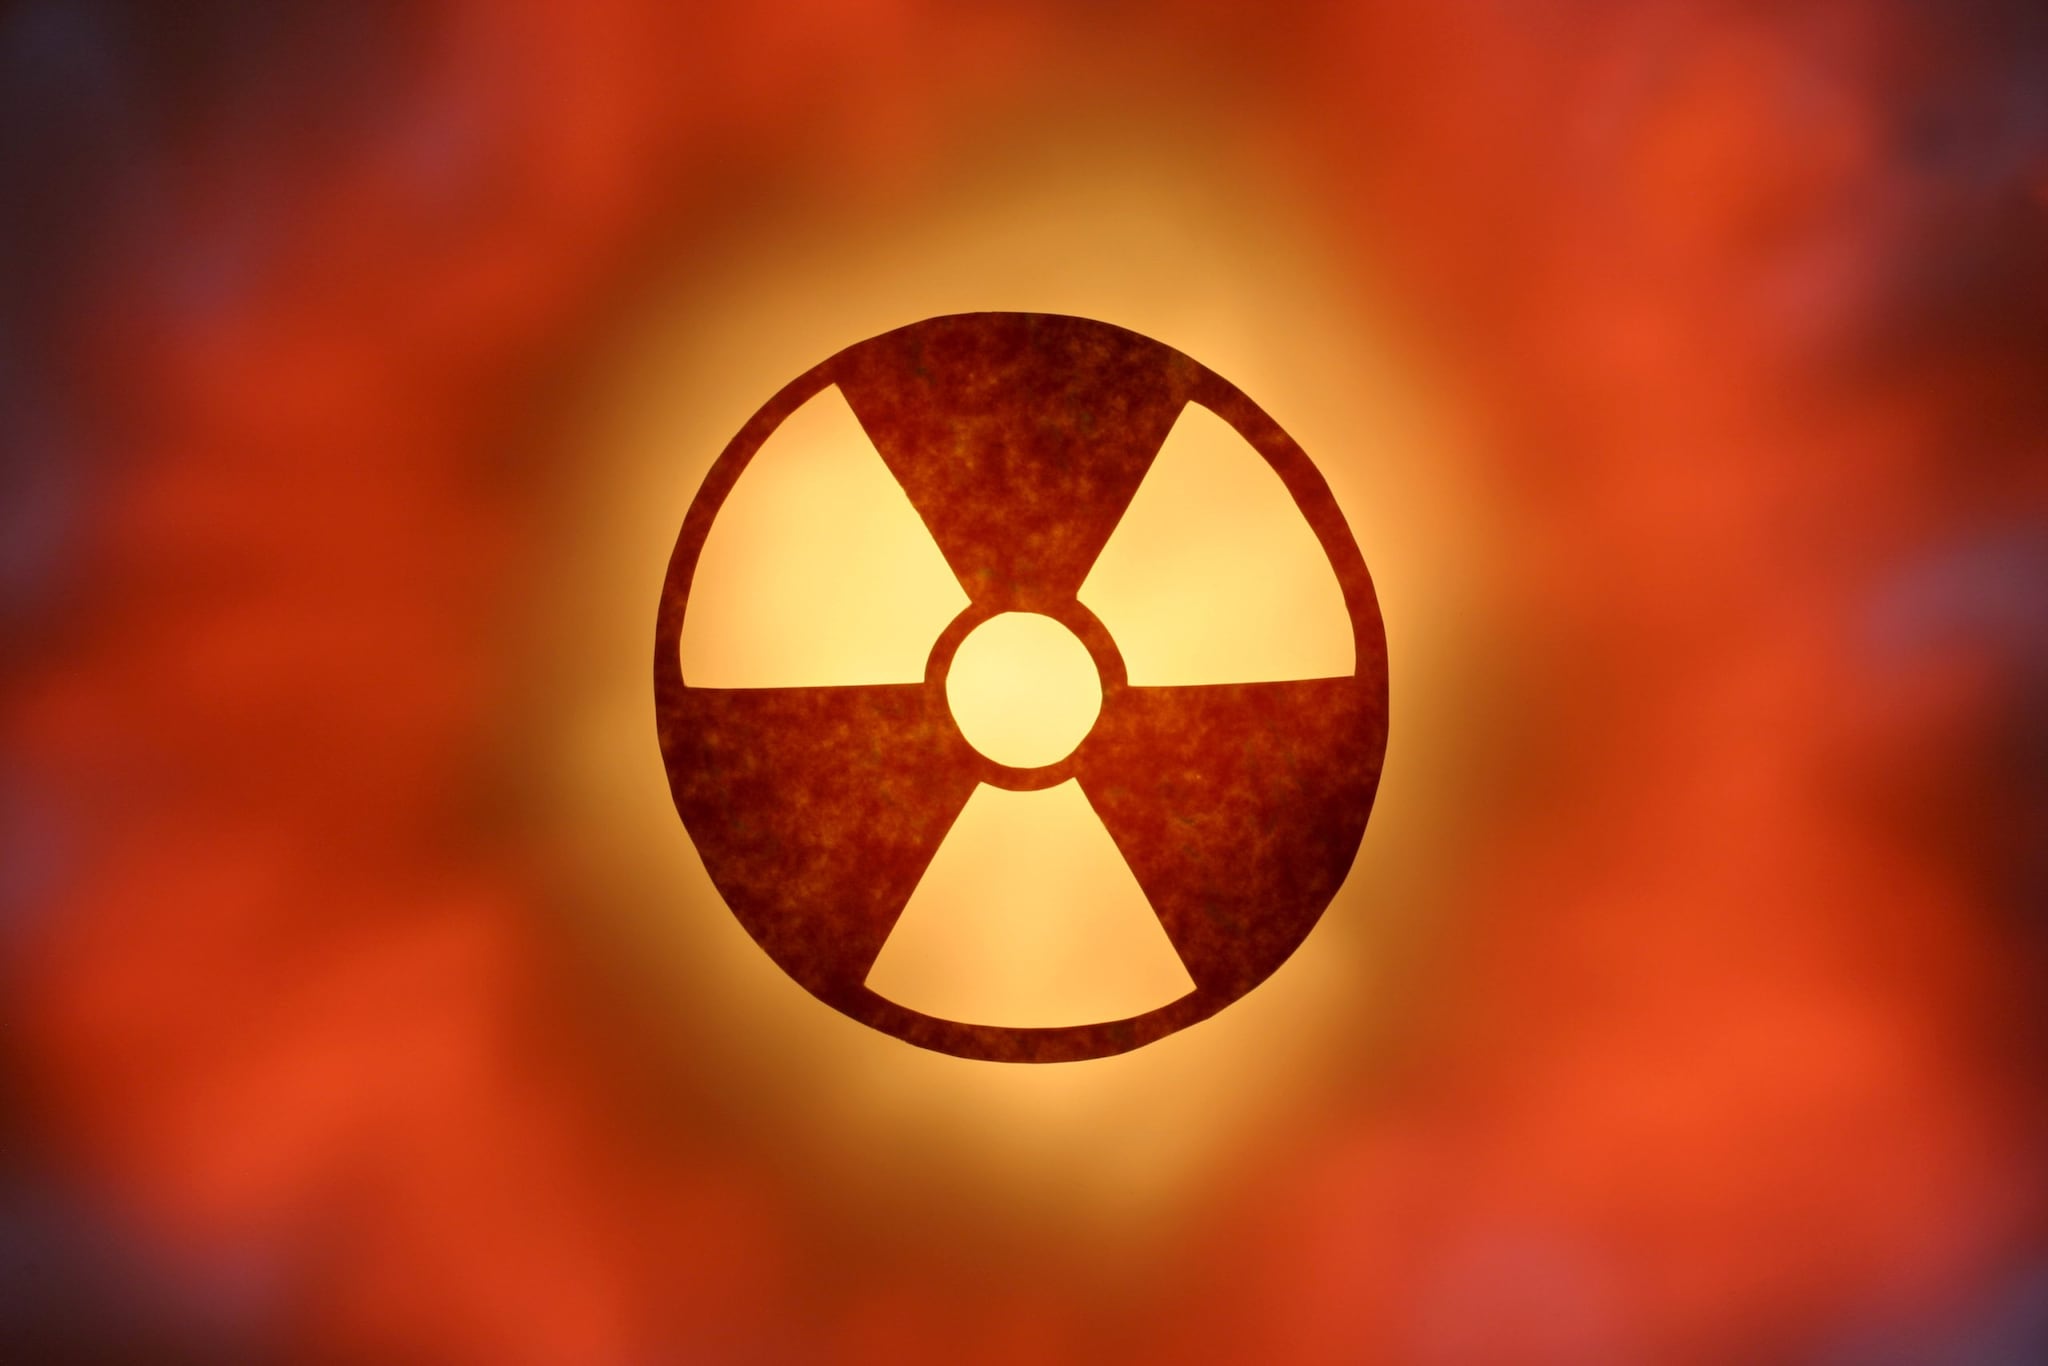 Red-orange colored glowing radioactive symbol